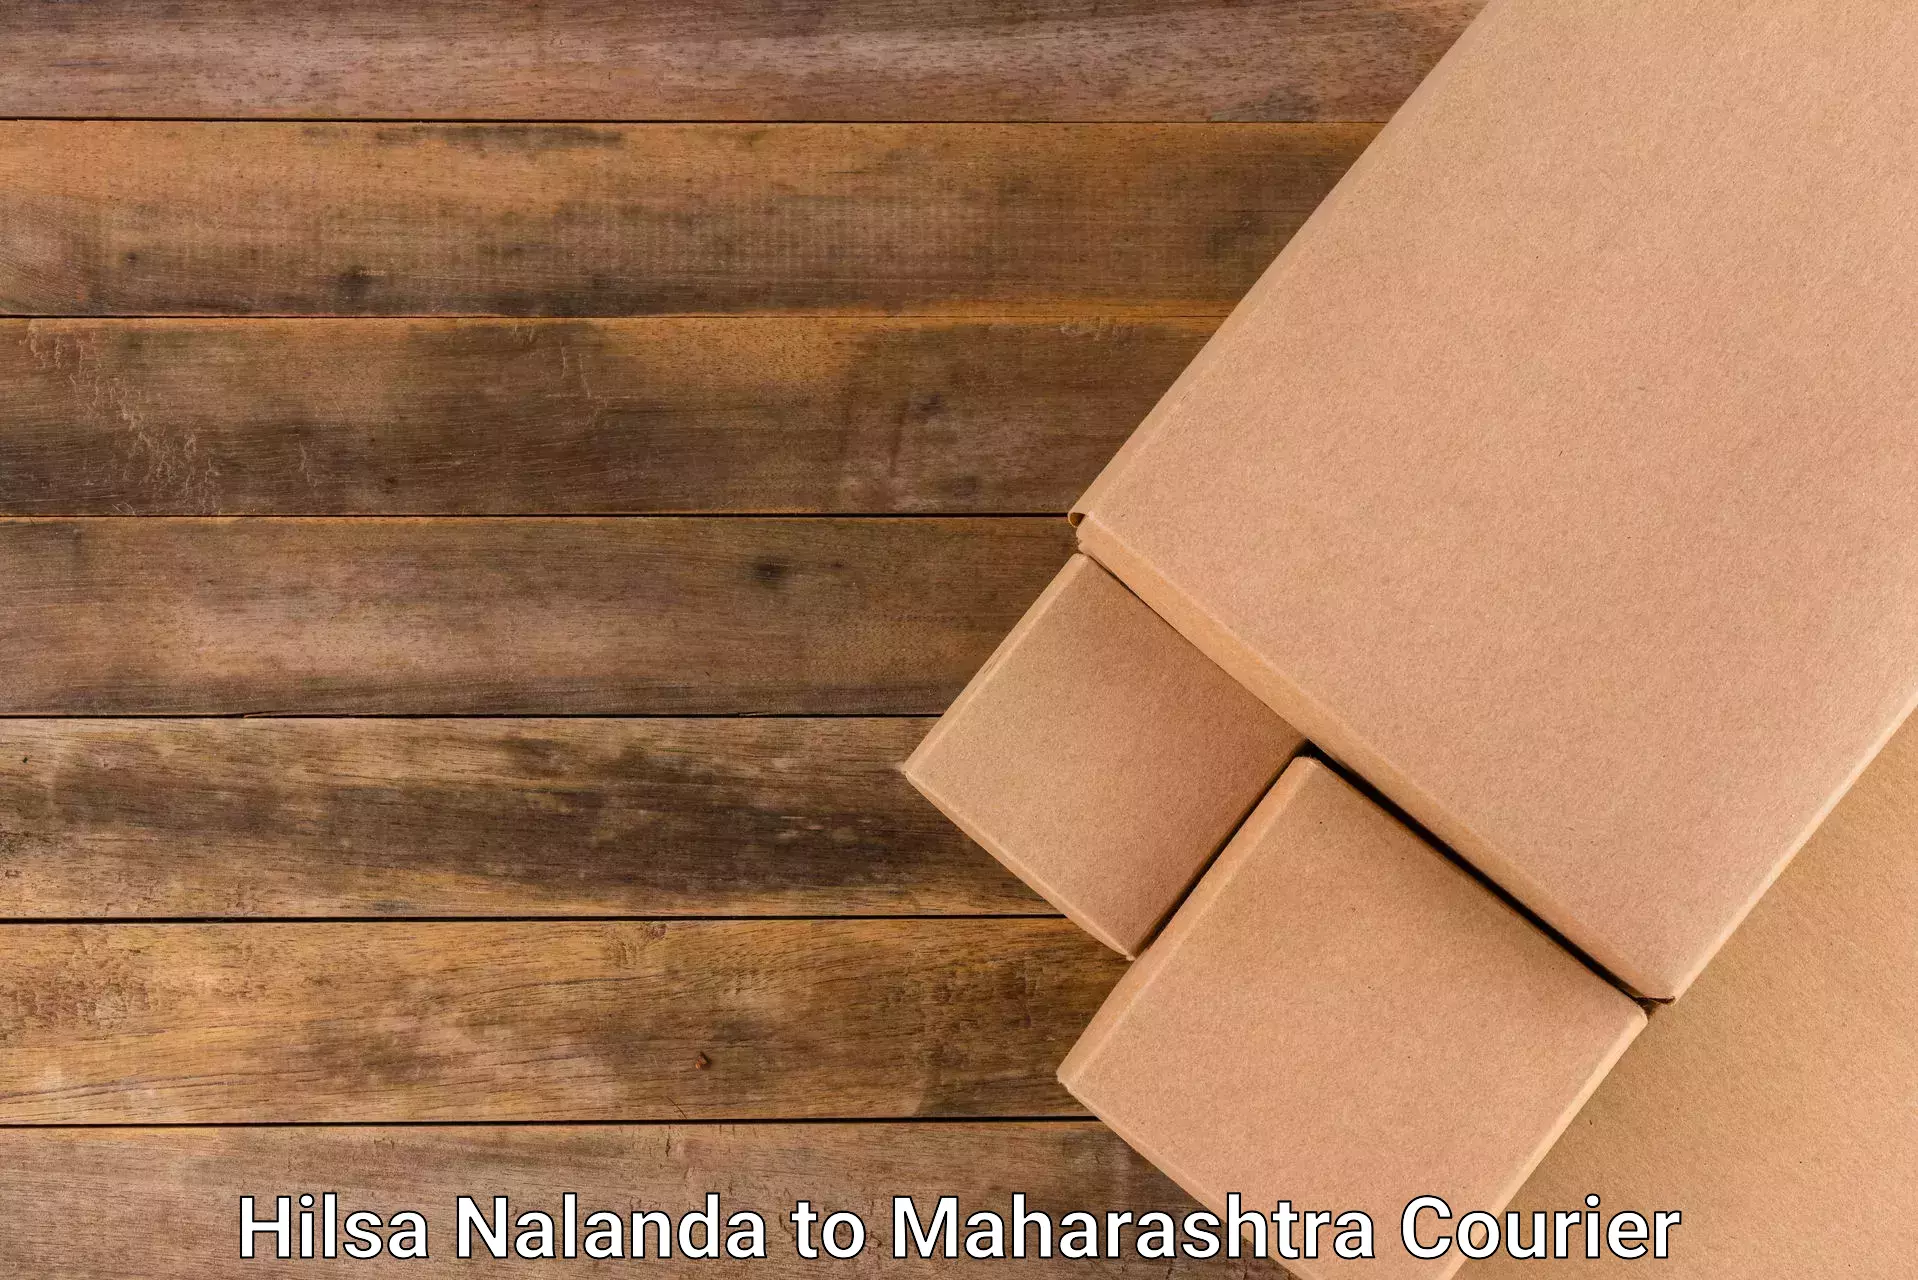 Multi-service courier options Hilsa Nalanda to Shivajinagar